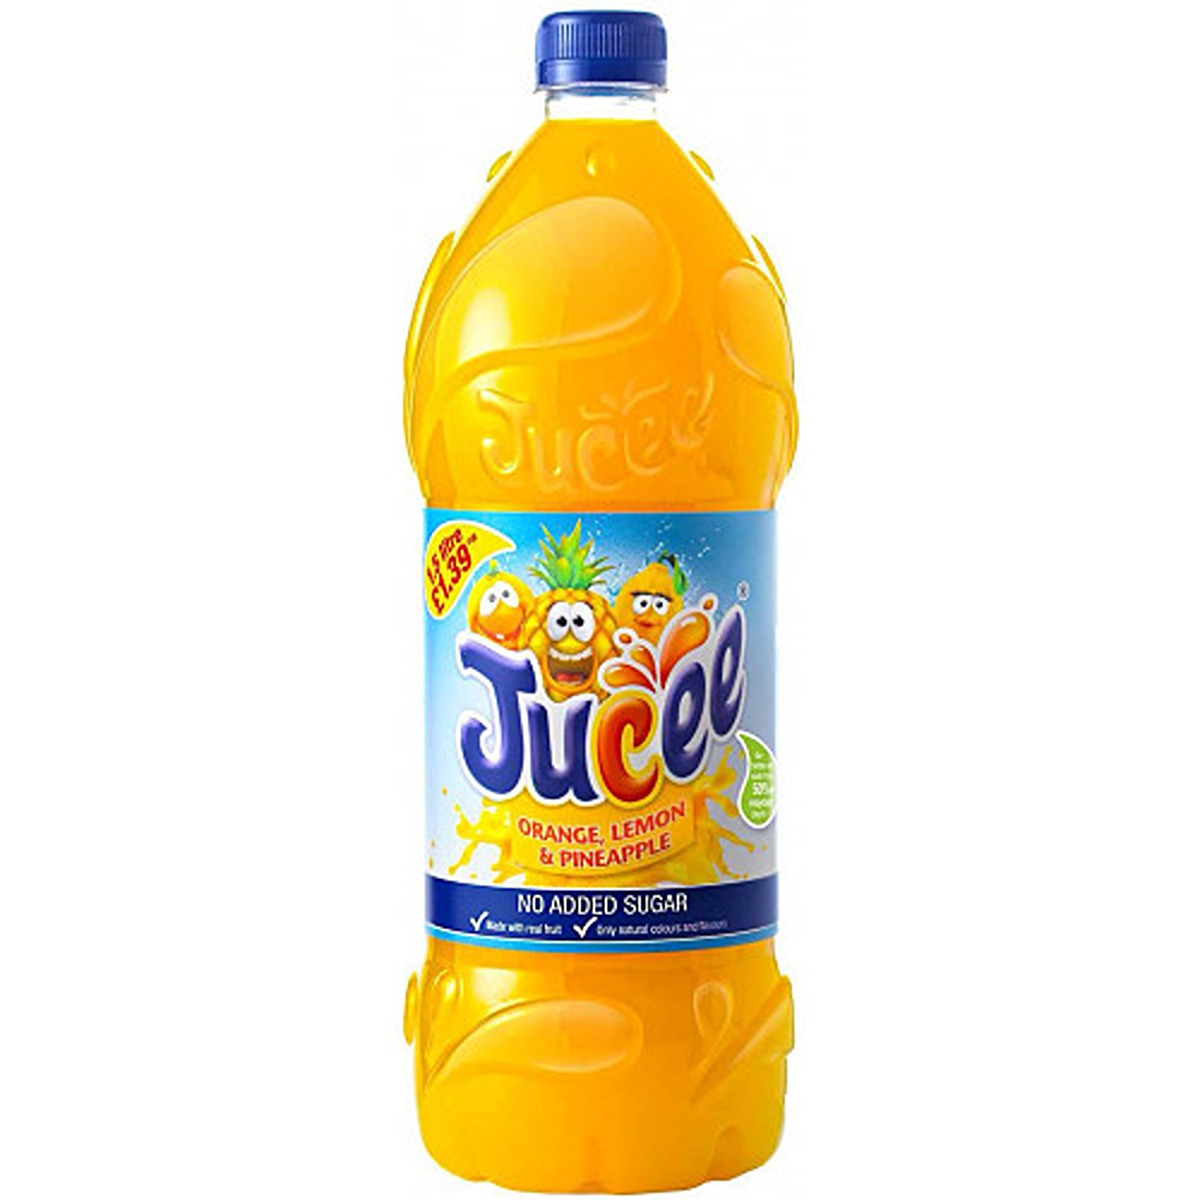 Jucee orange juice 750ml.